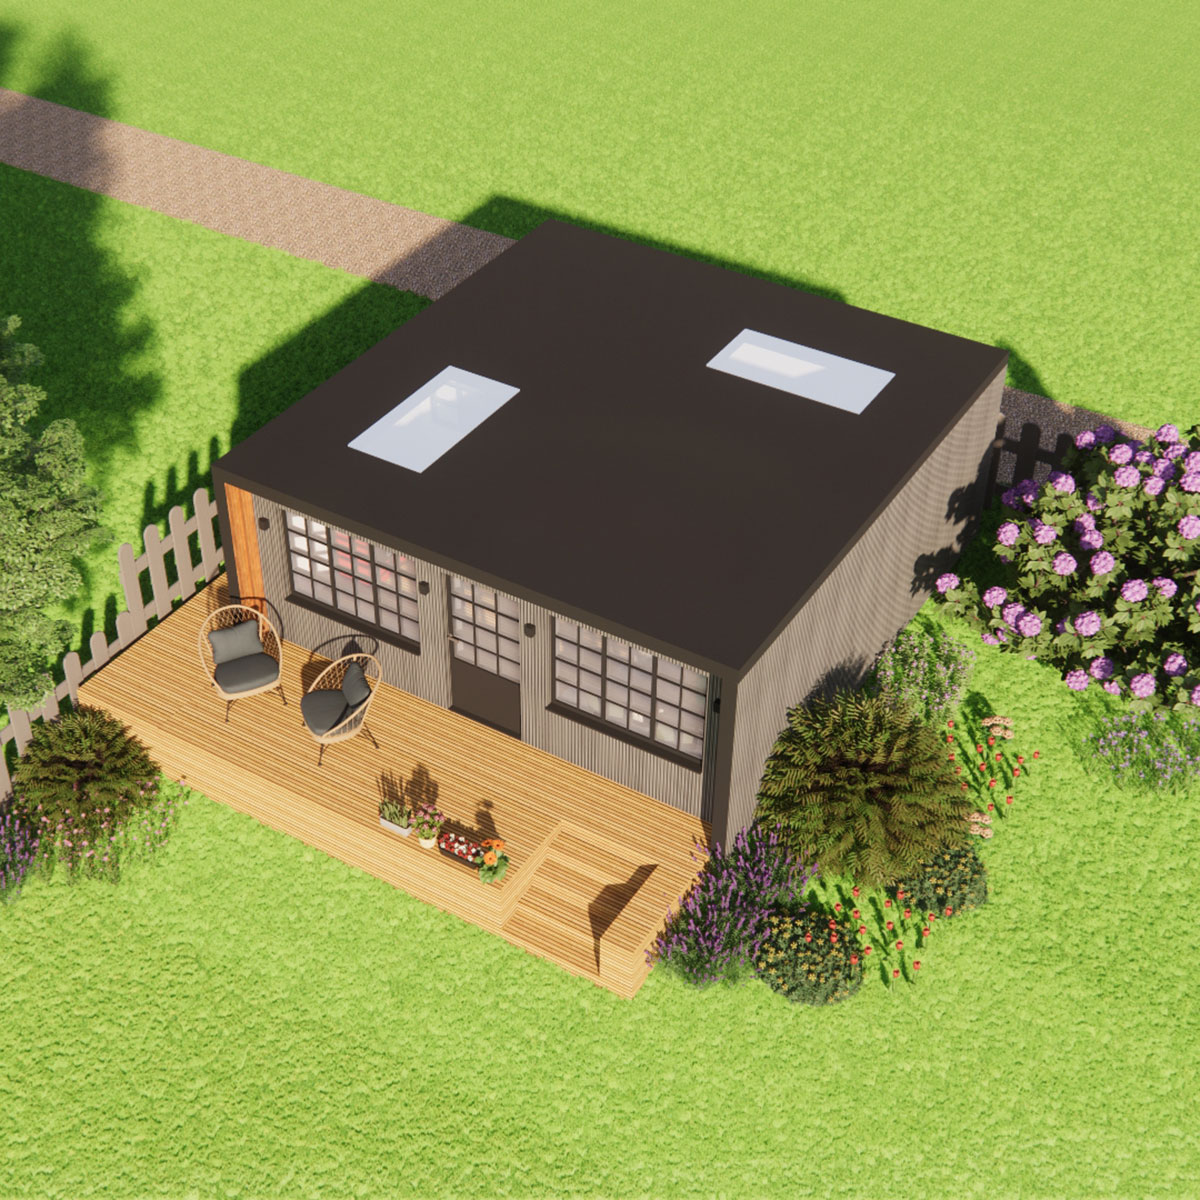 Visualisation for garden mobile home